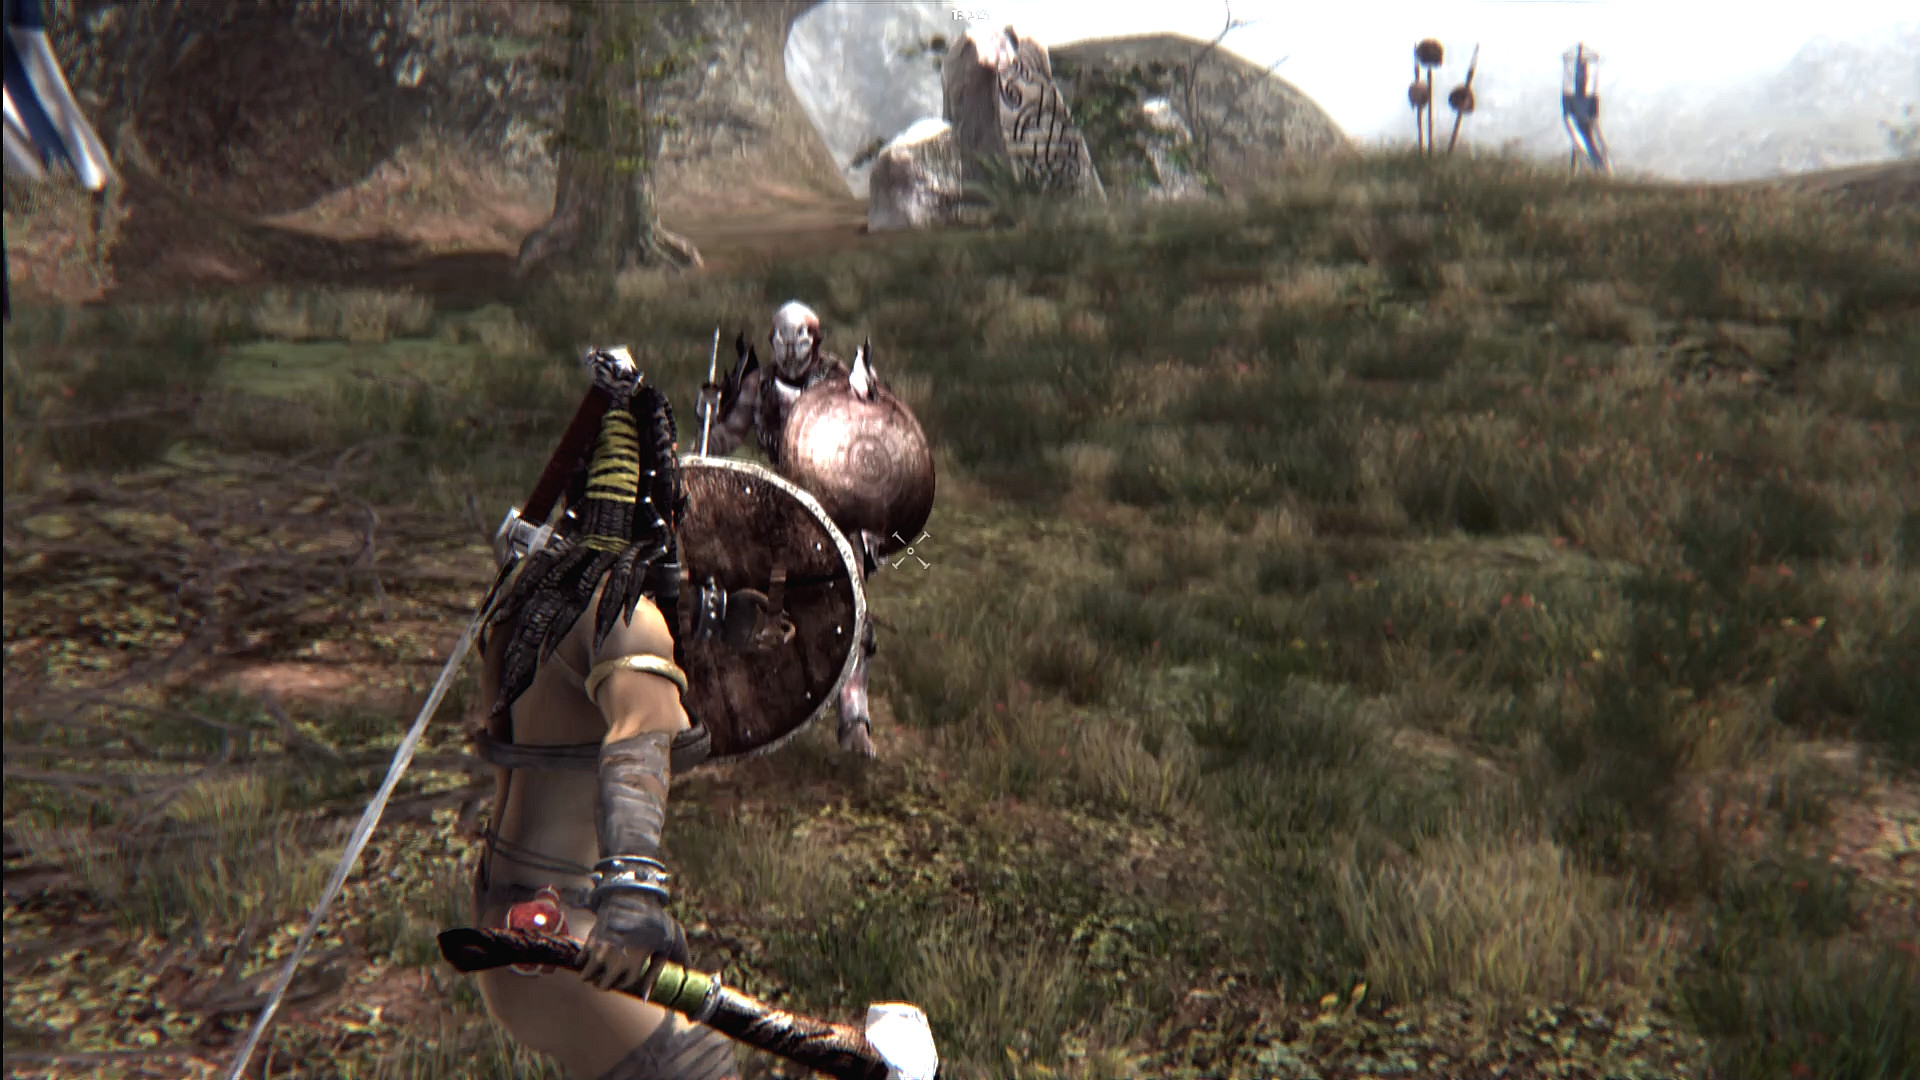 Krum - Battle Arena - Gul Warrior screenshot